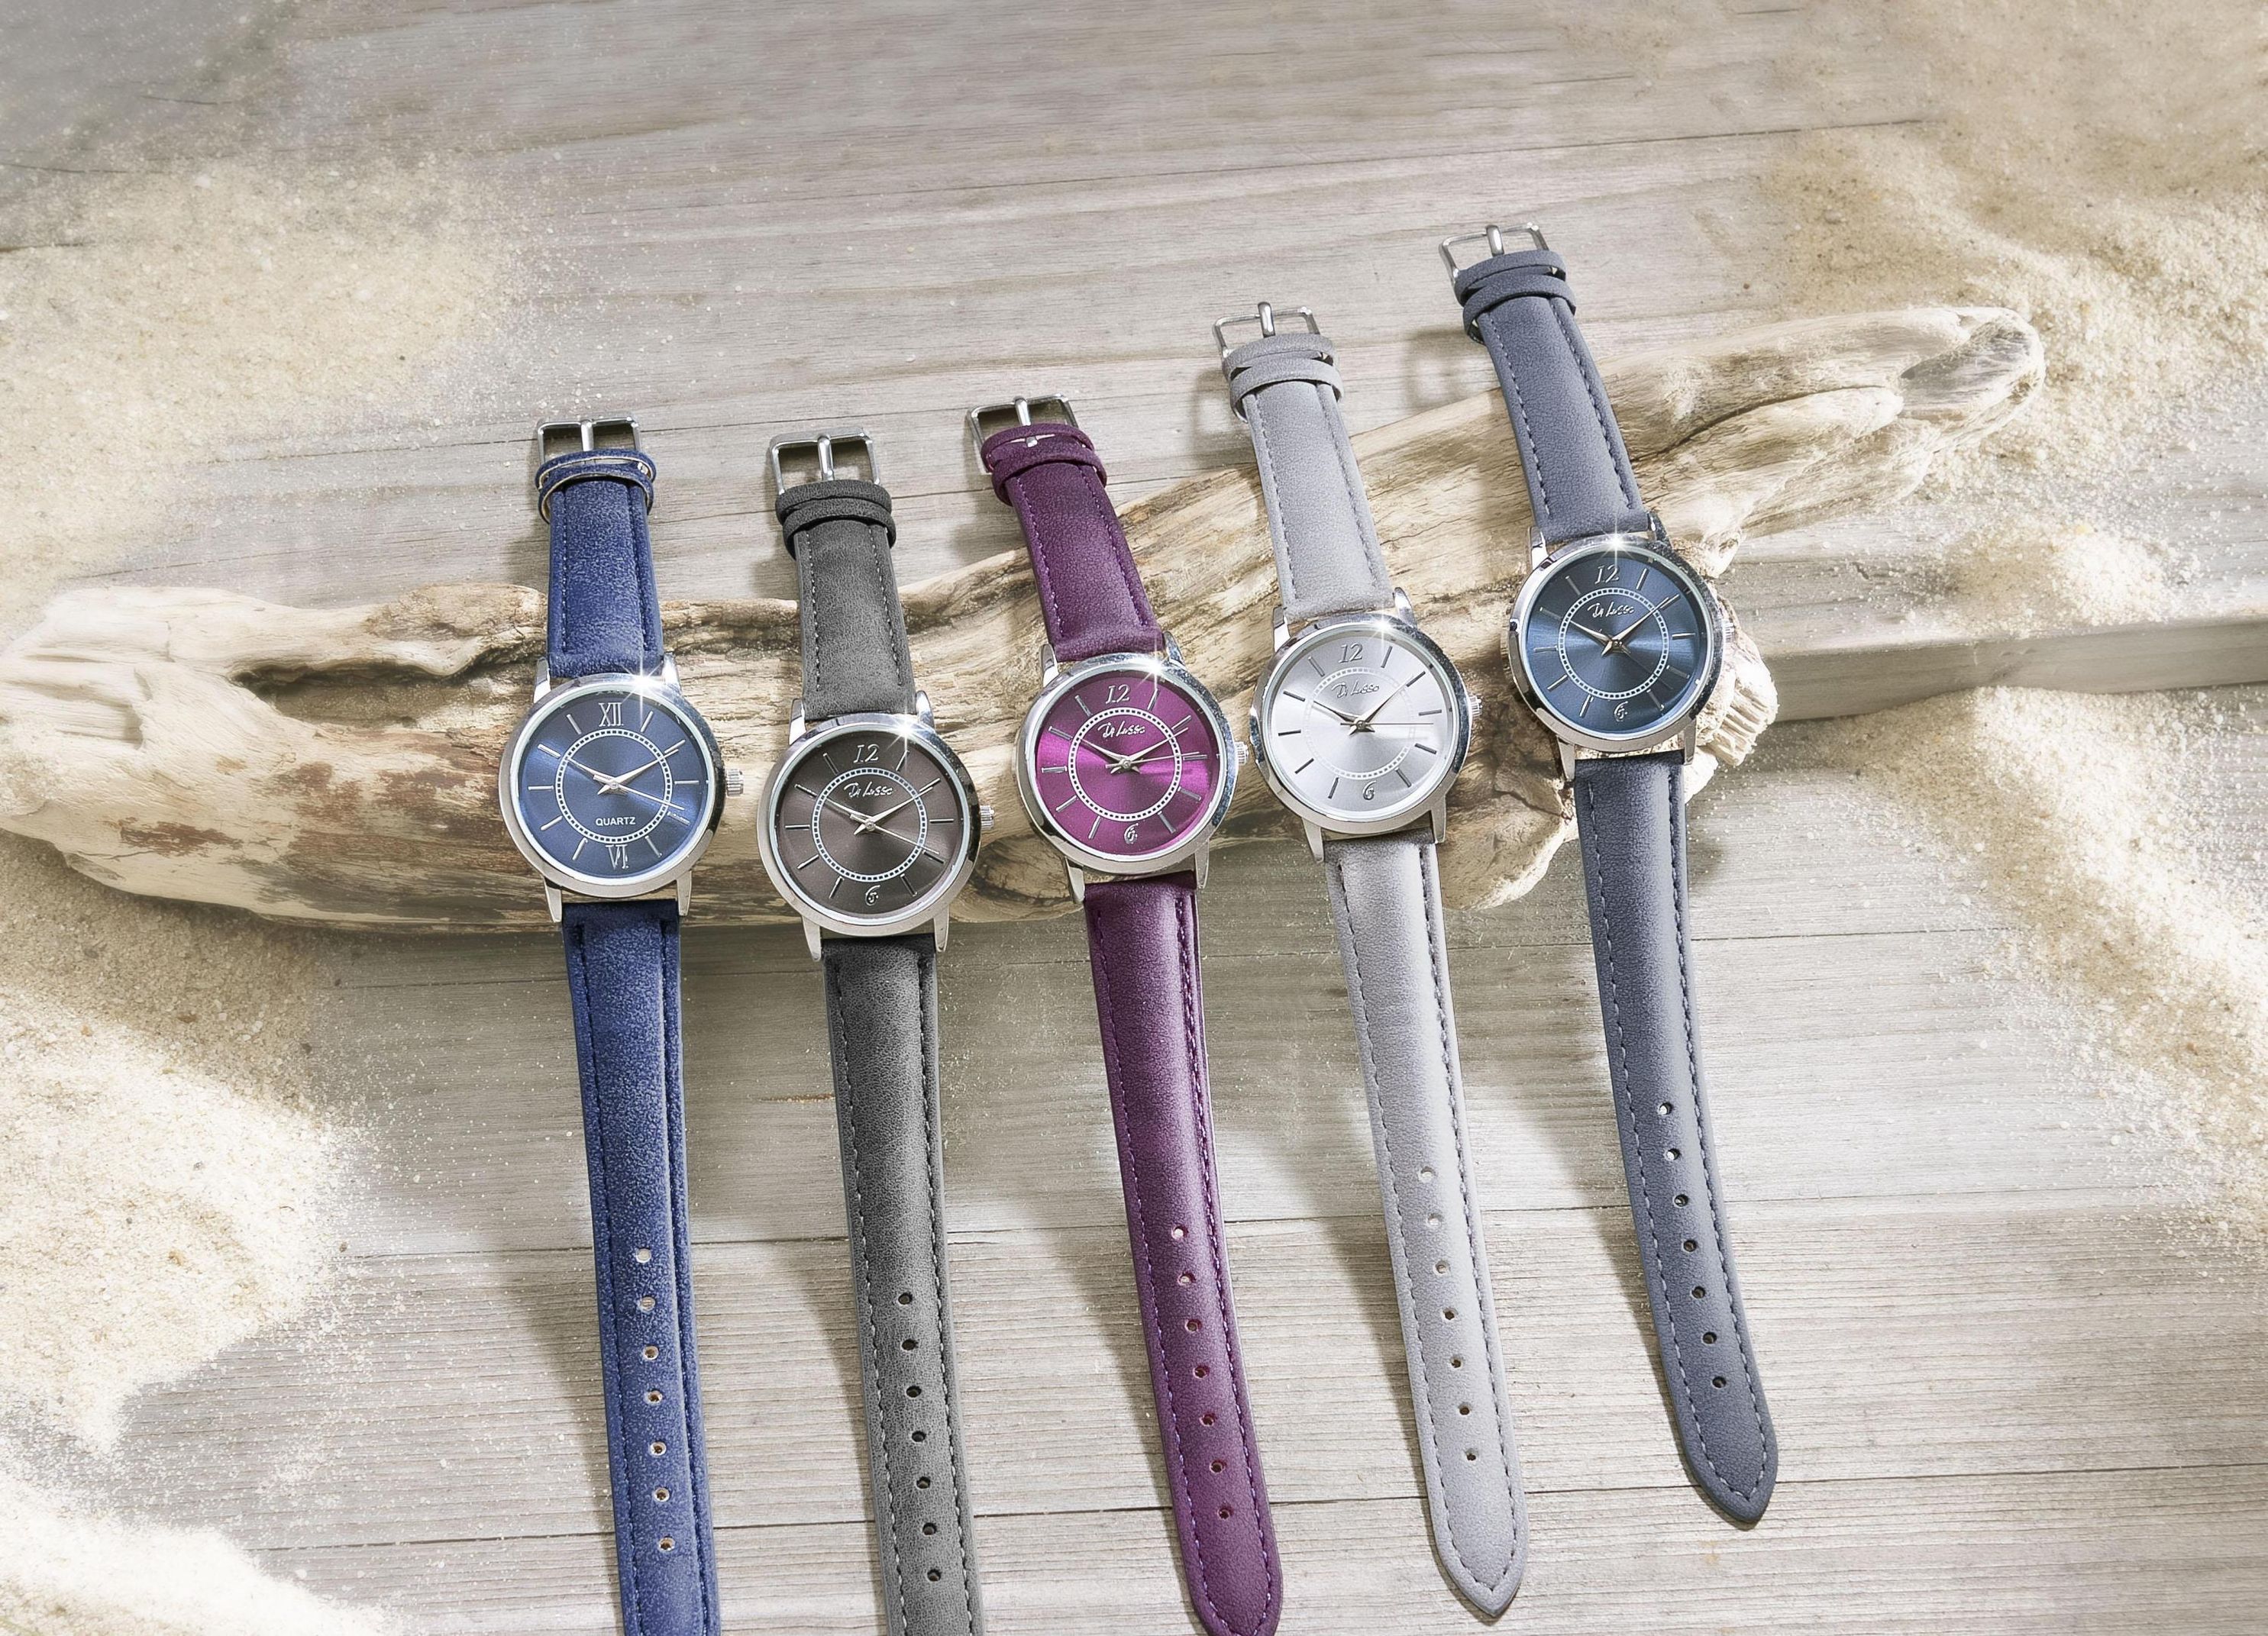 DL Armbanduhr Roma Farbe: dunkelblau bestellen | Weltbild.de